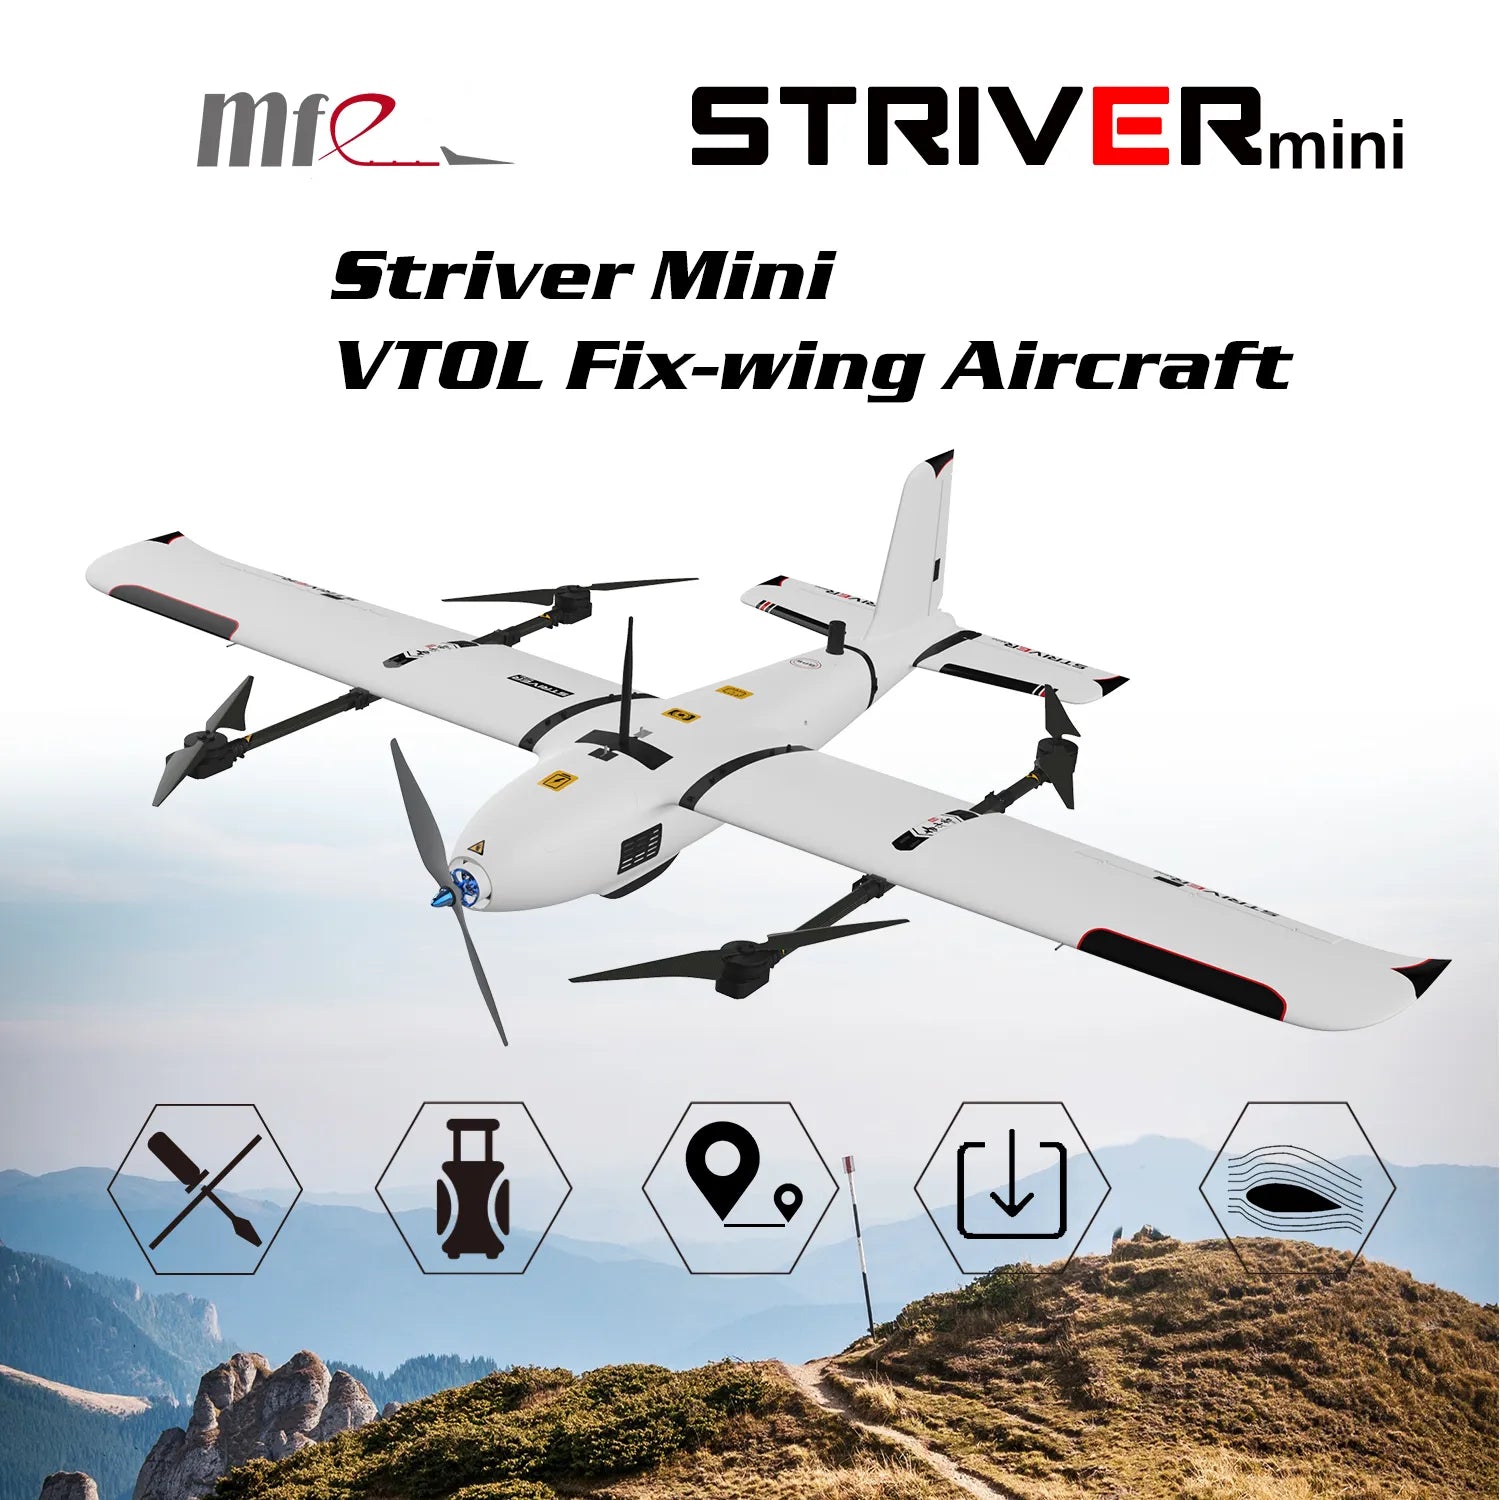 mfC STRIVERmini Striver Mini VTOL Fix-wing Air